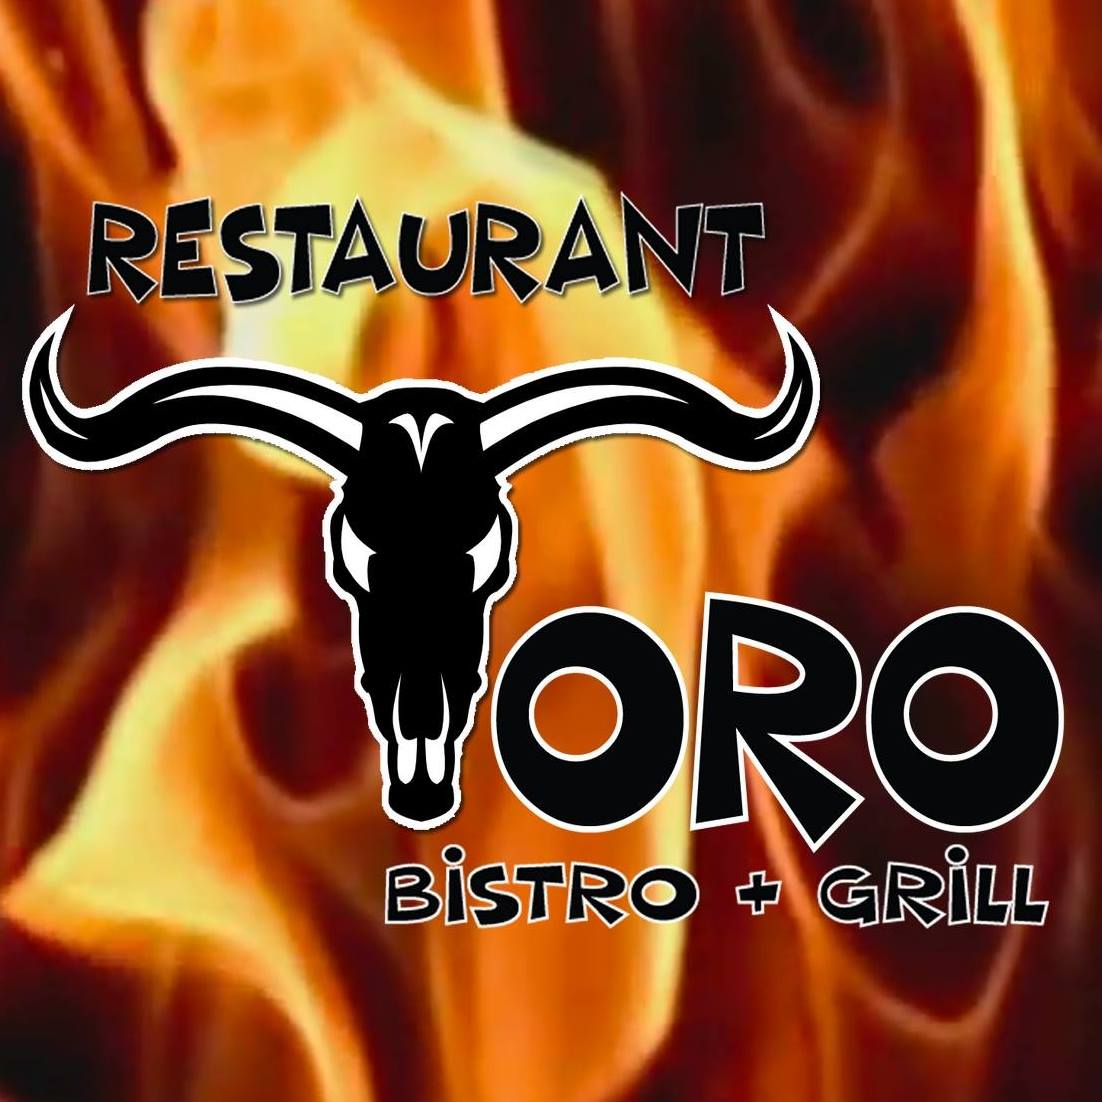 Restaurant Toro Bistro & Grill